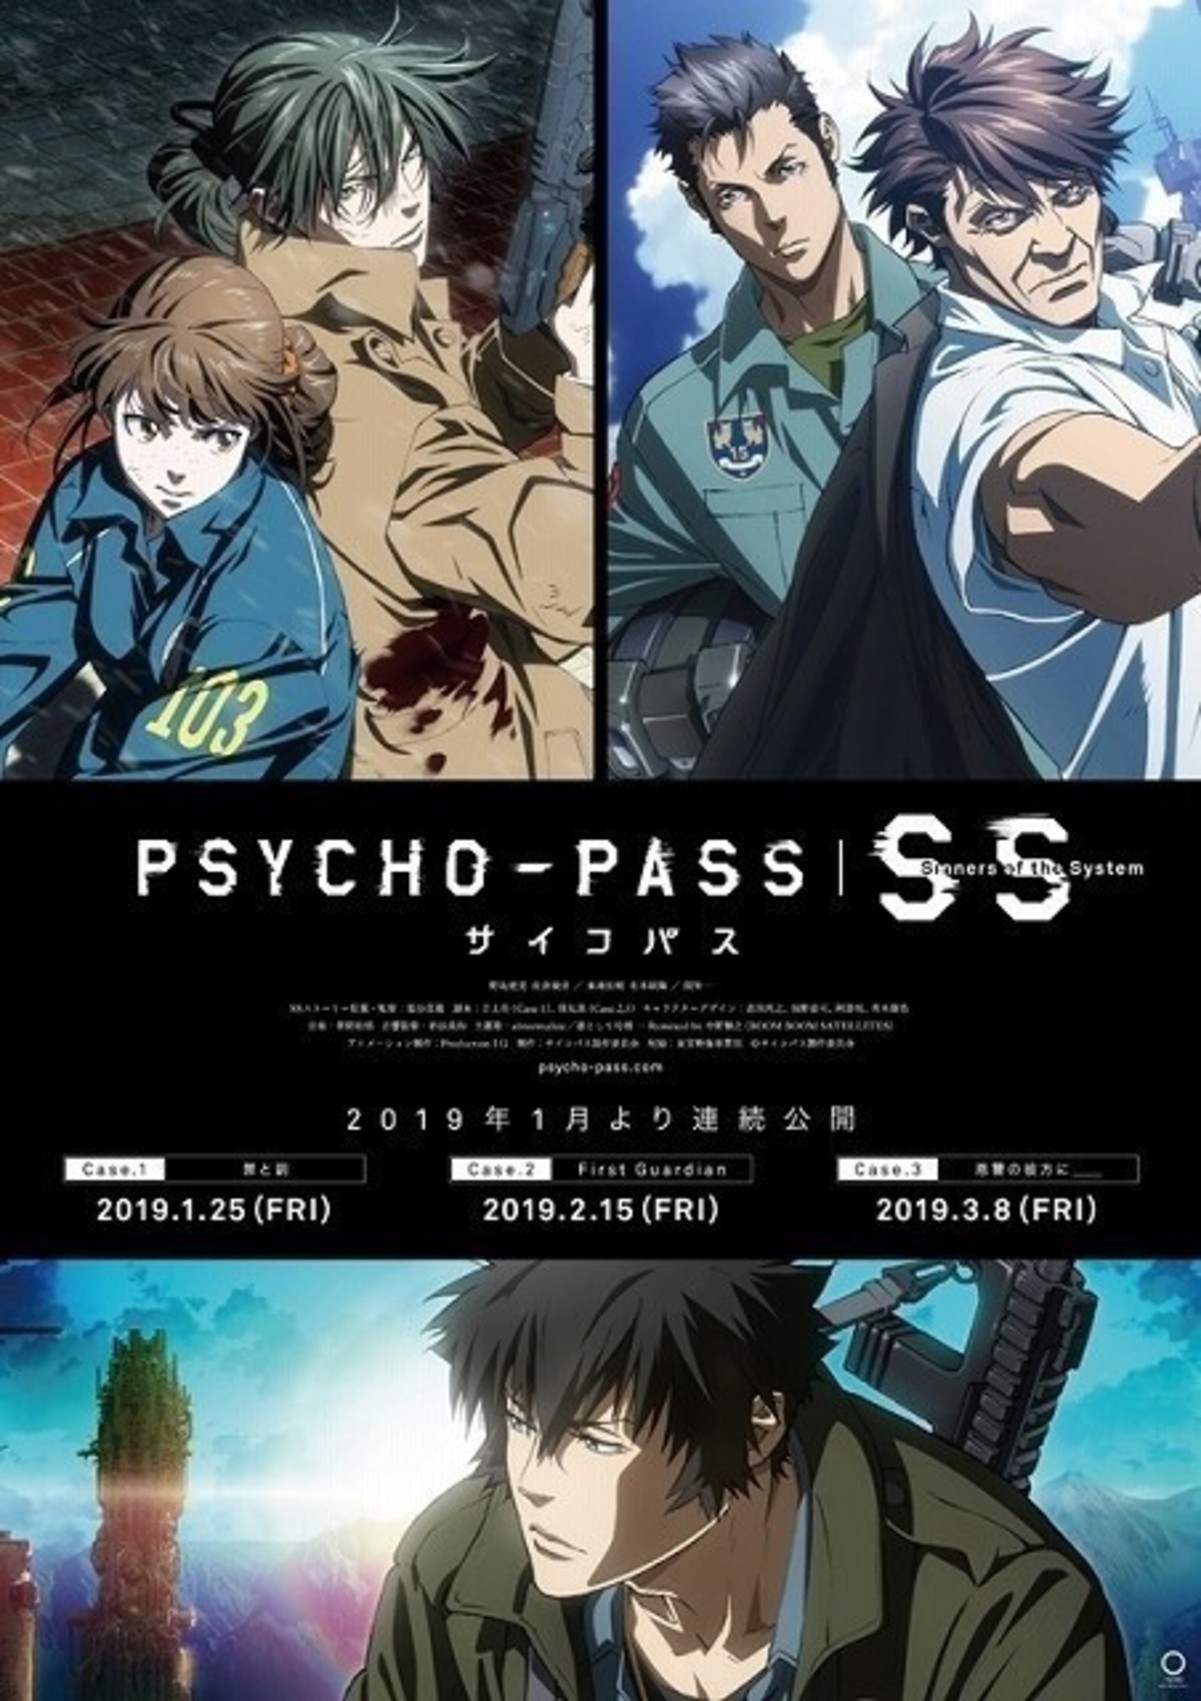 Psycho Pass 劇場3部作が4dxでも上映決定 来場者特典は数量限定設定集